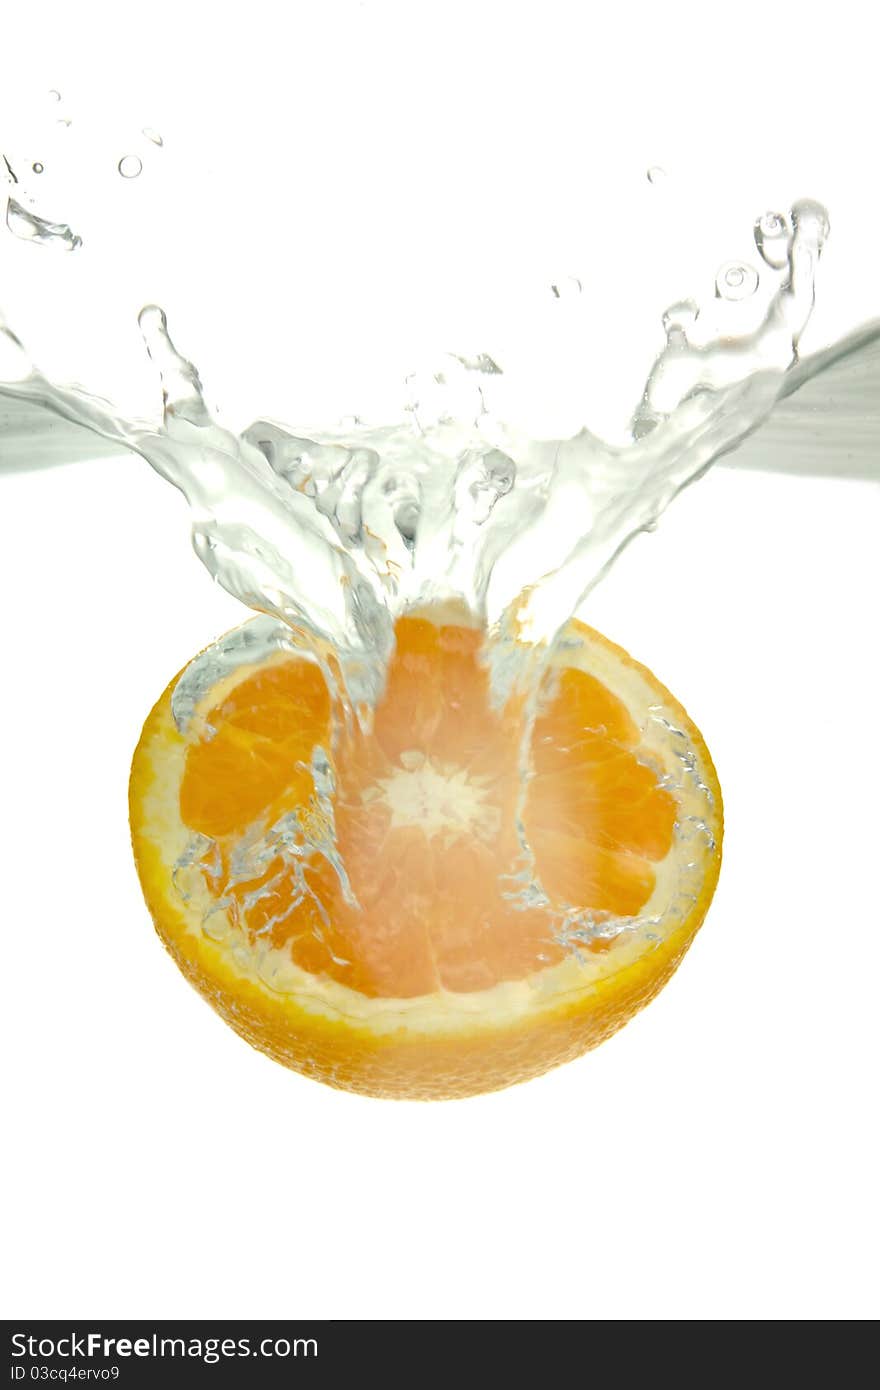 Orange thrown into the water with splash, on white background.